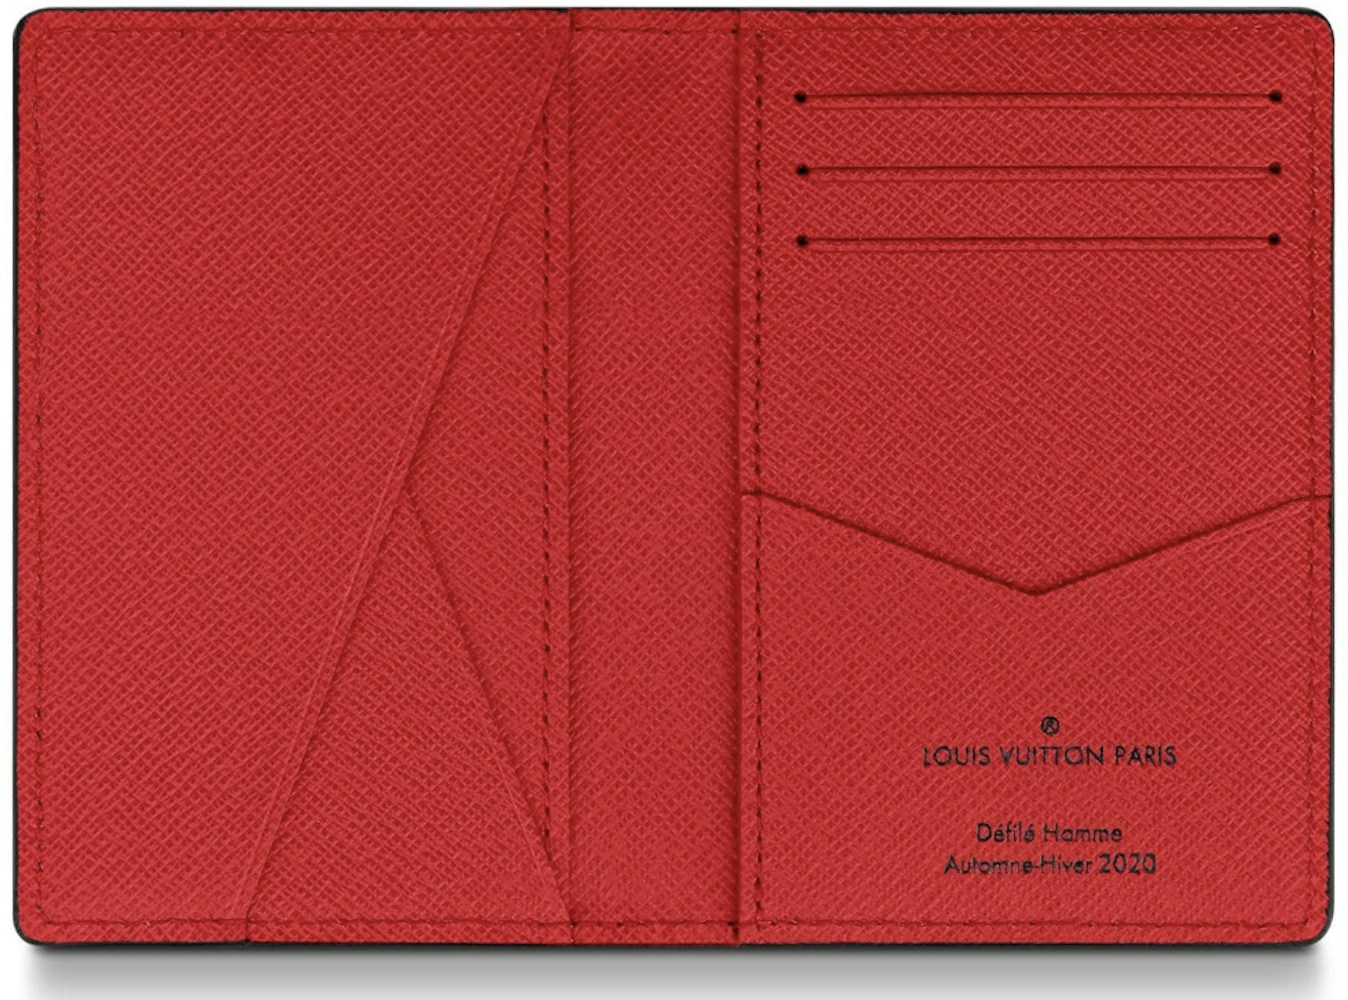 Louis Vuitton POCKET ORGANIZER Monogram 3.1 x 4.3 x 0.4 inches